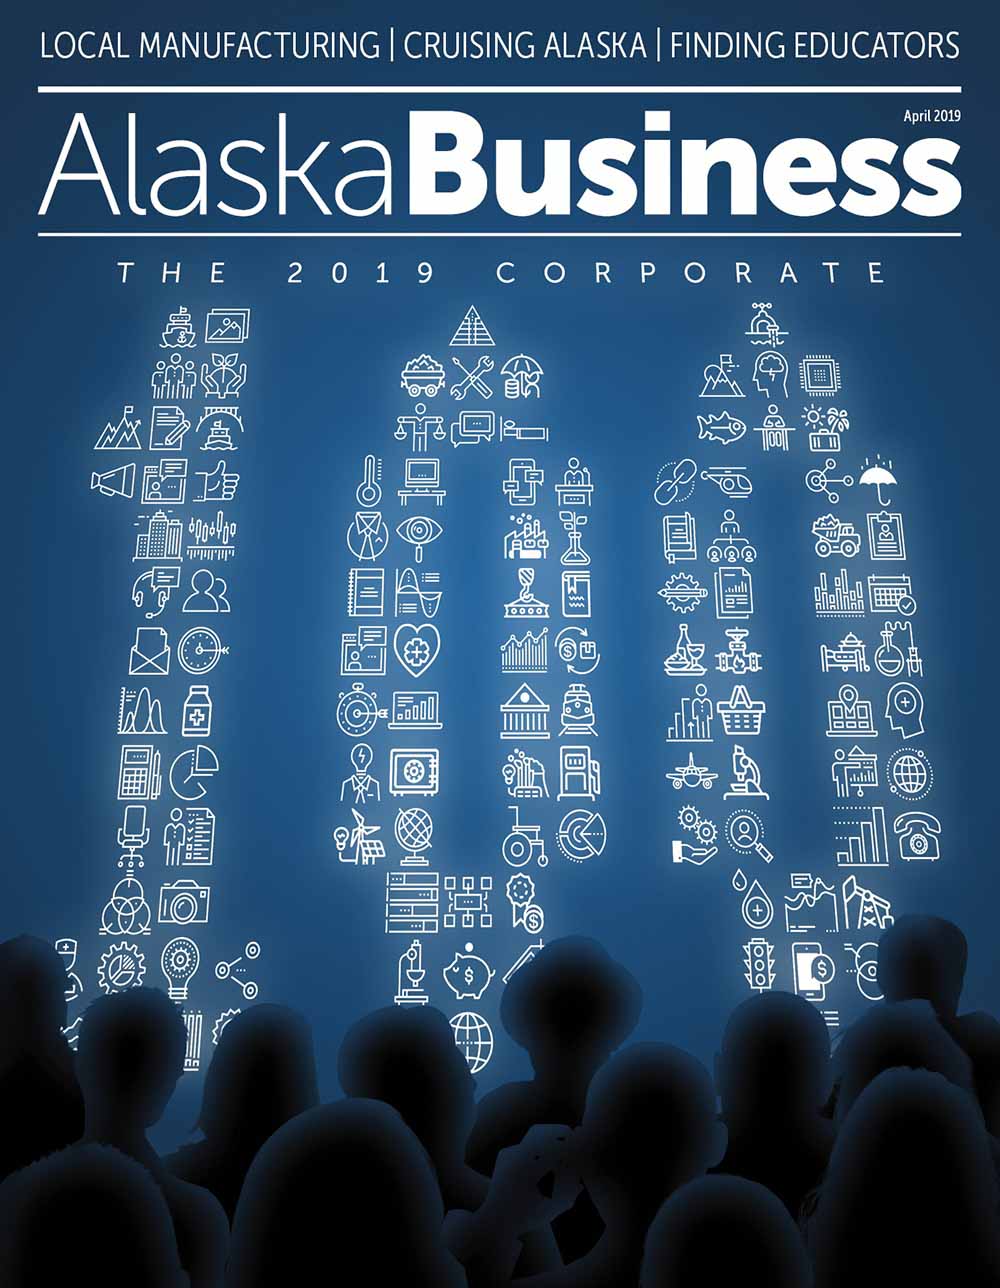 Alaska Business Magazine April 2019 cover